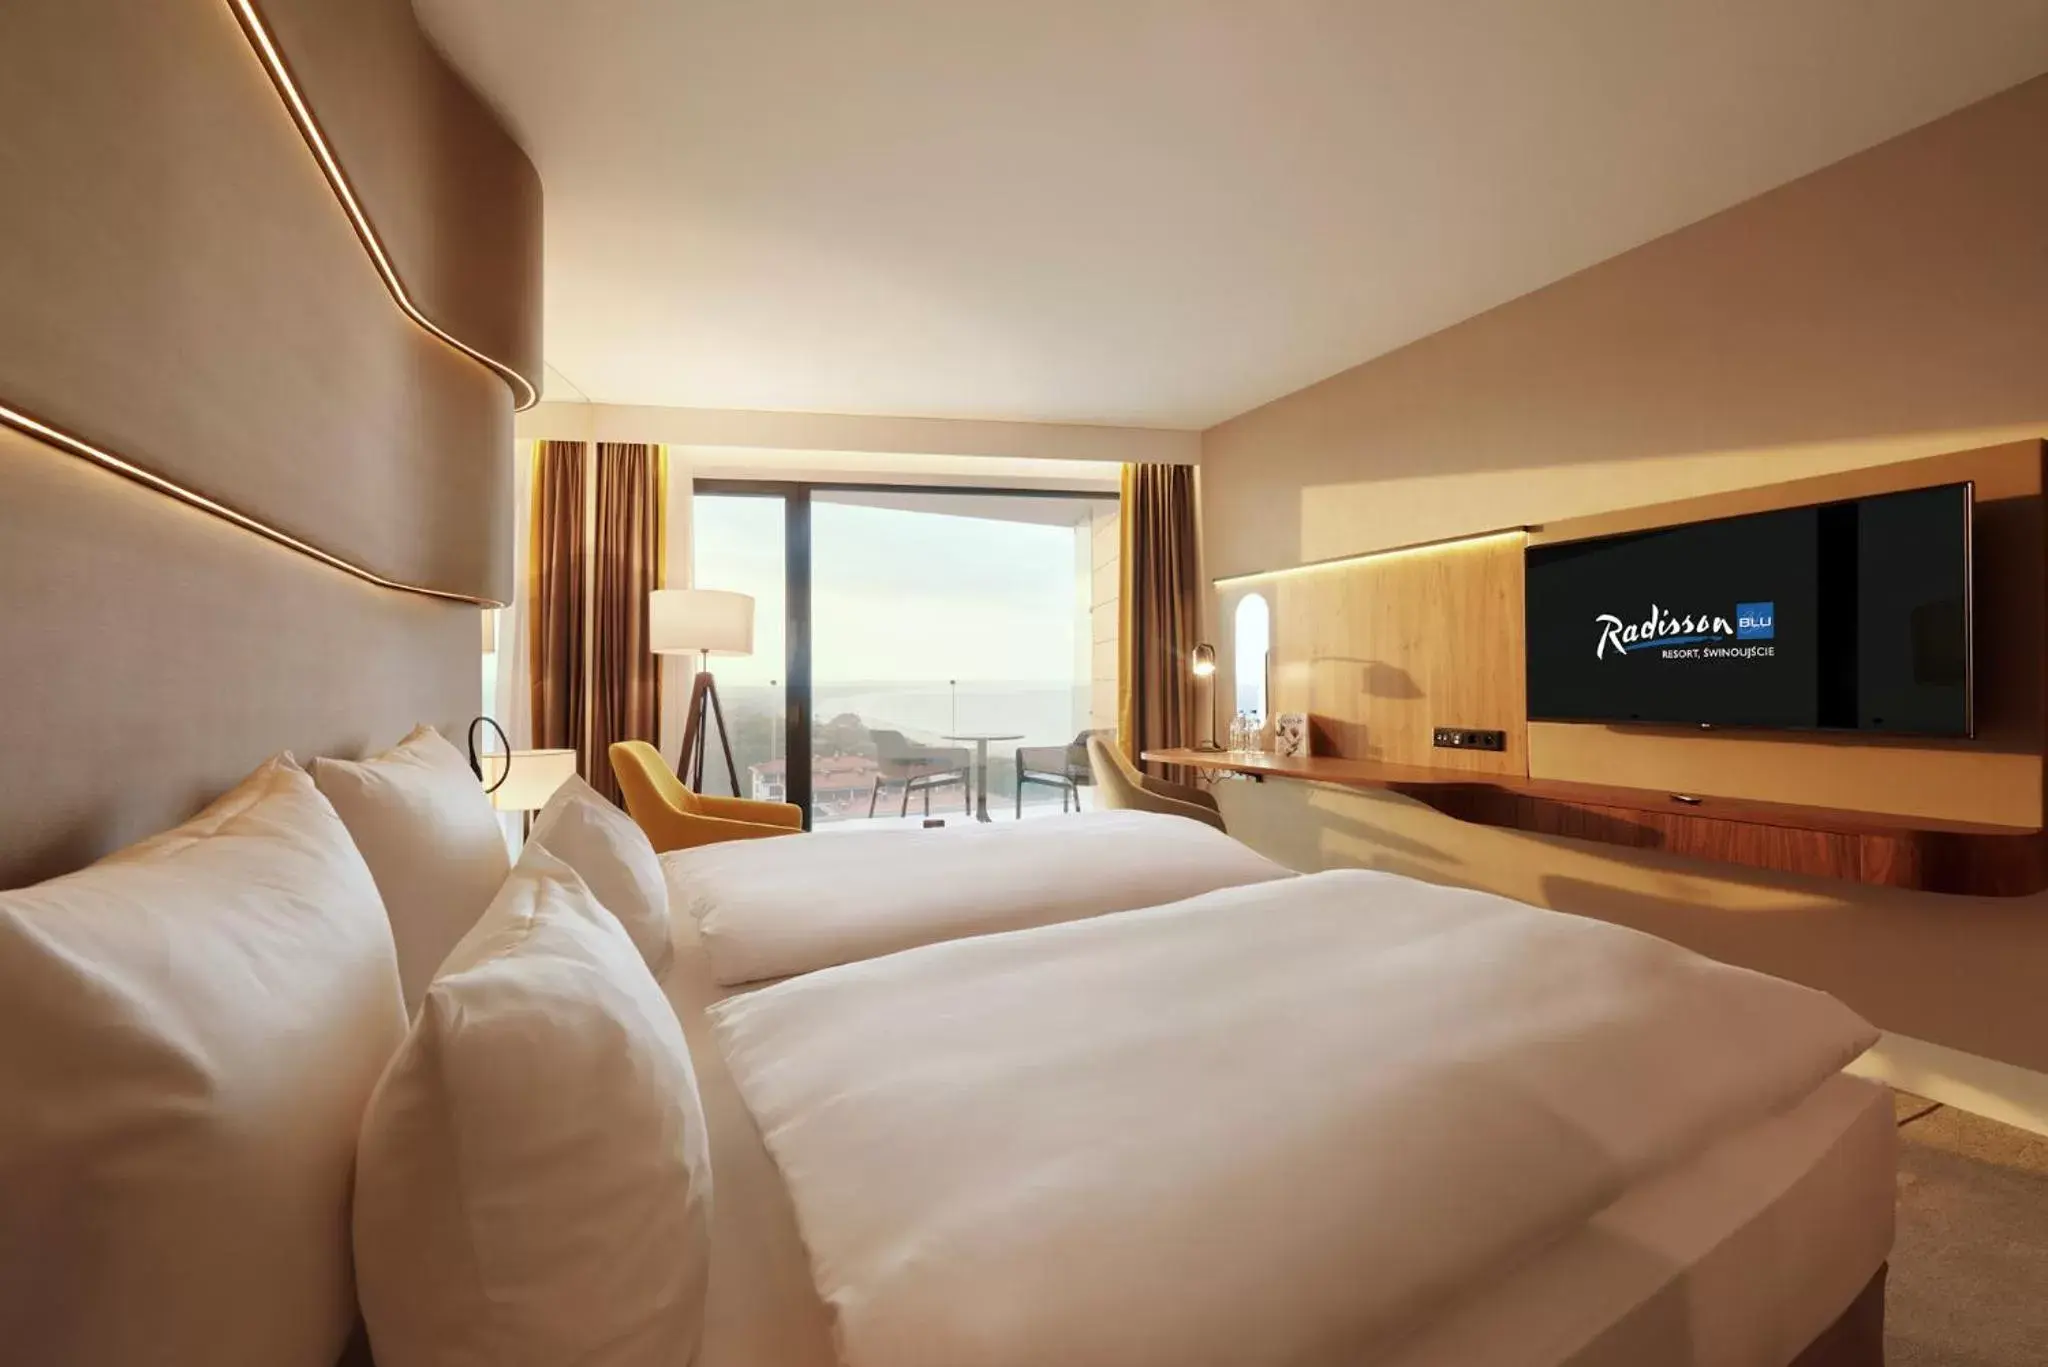 Bedroom in Radisson Blu Resort Swinoujscie